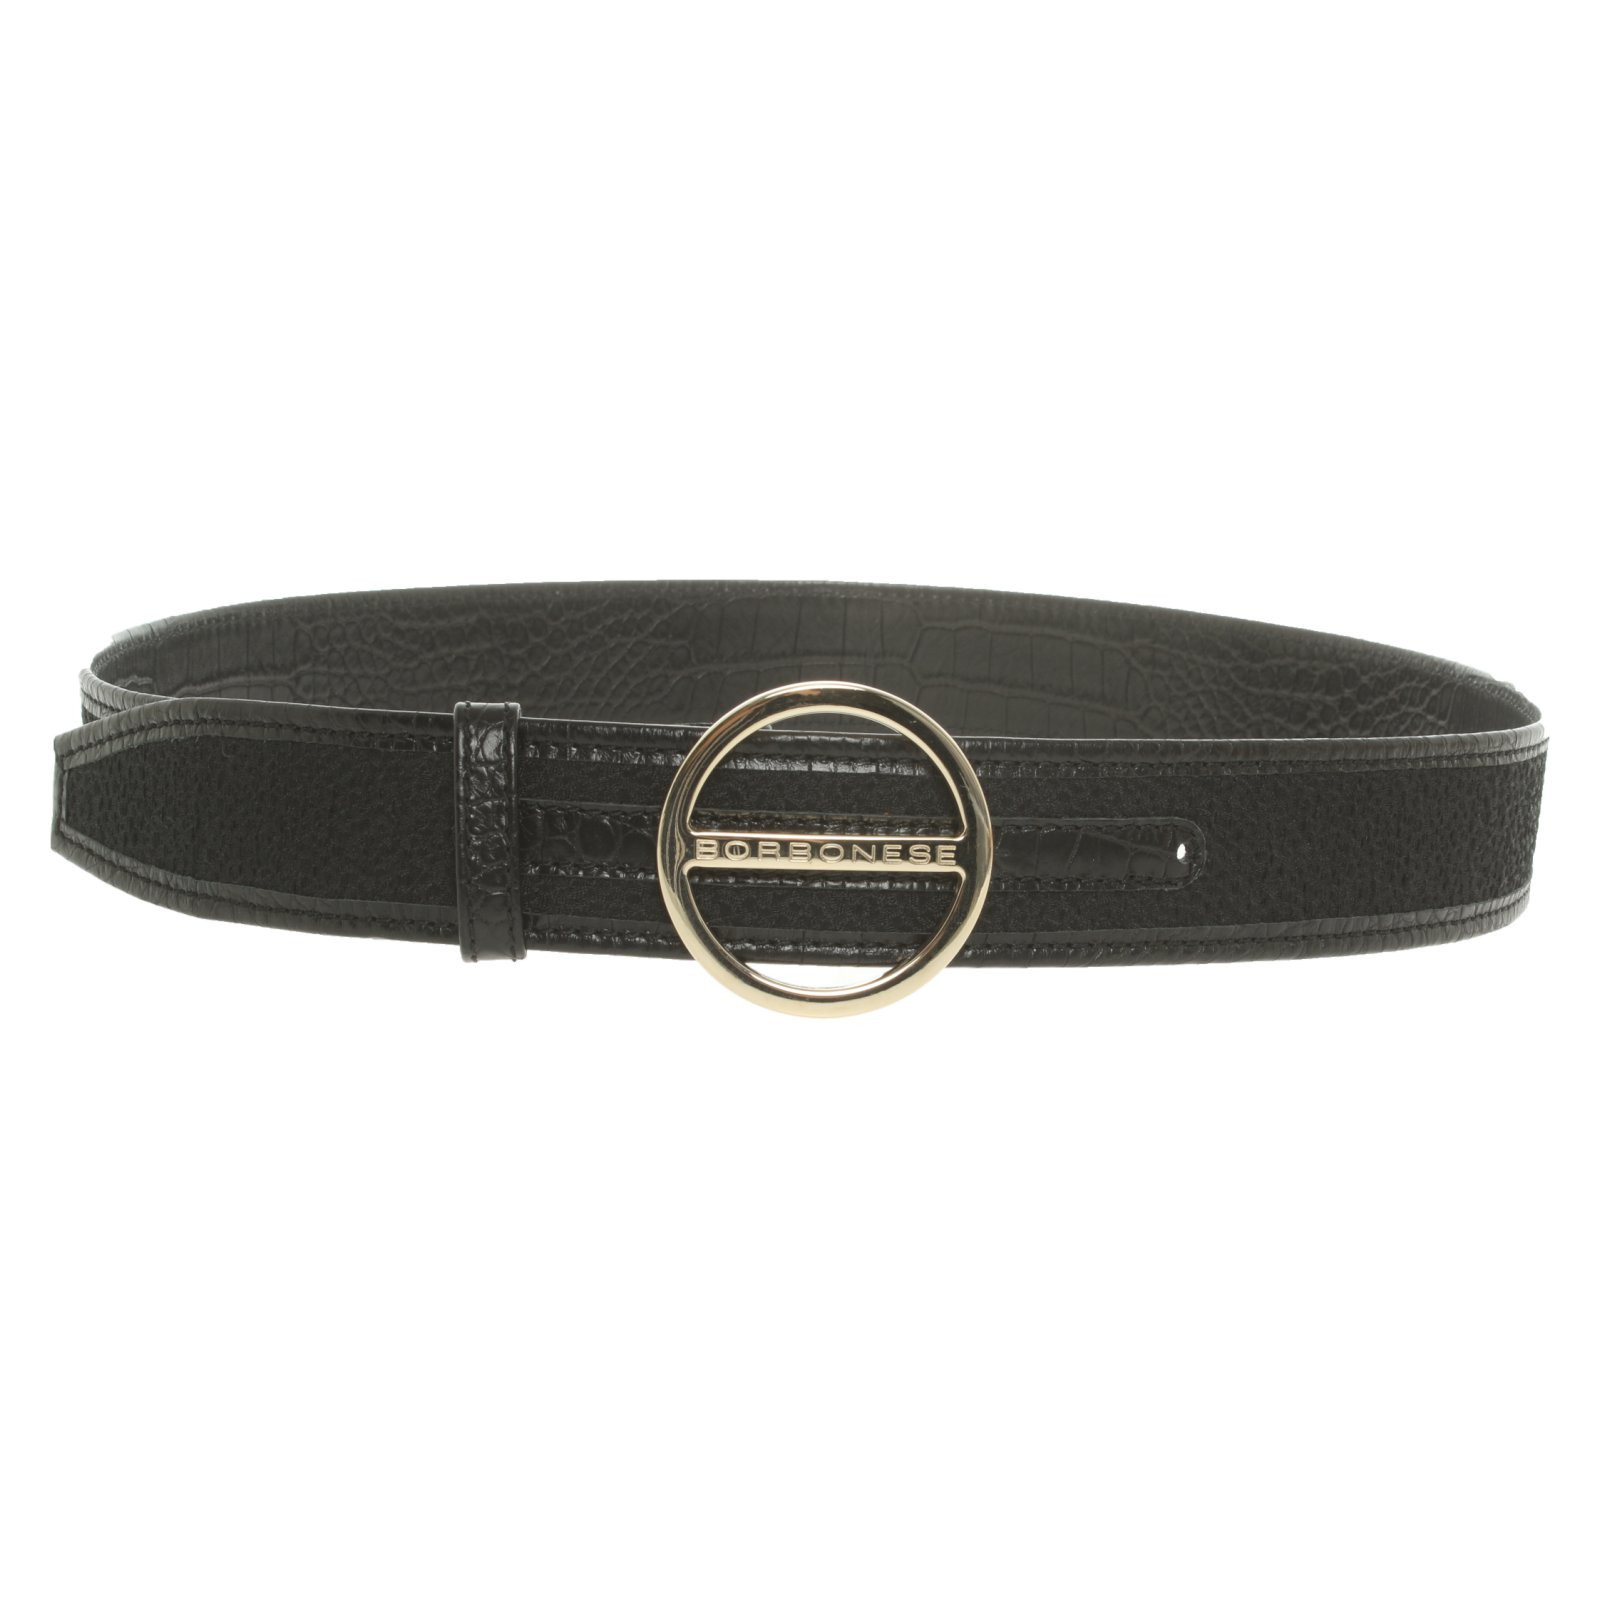 Borbonese Belt in Black - Second Hand Borbonese Belt in Black buy used for  70€ (4372259)